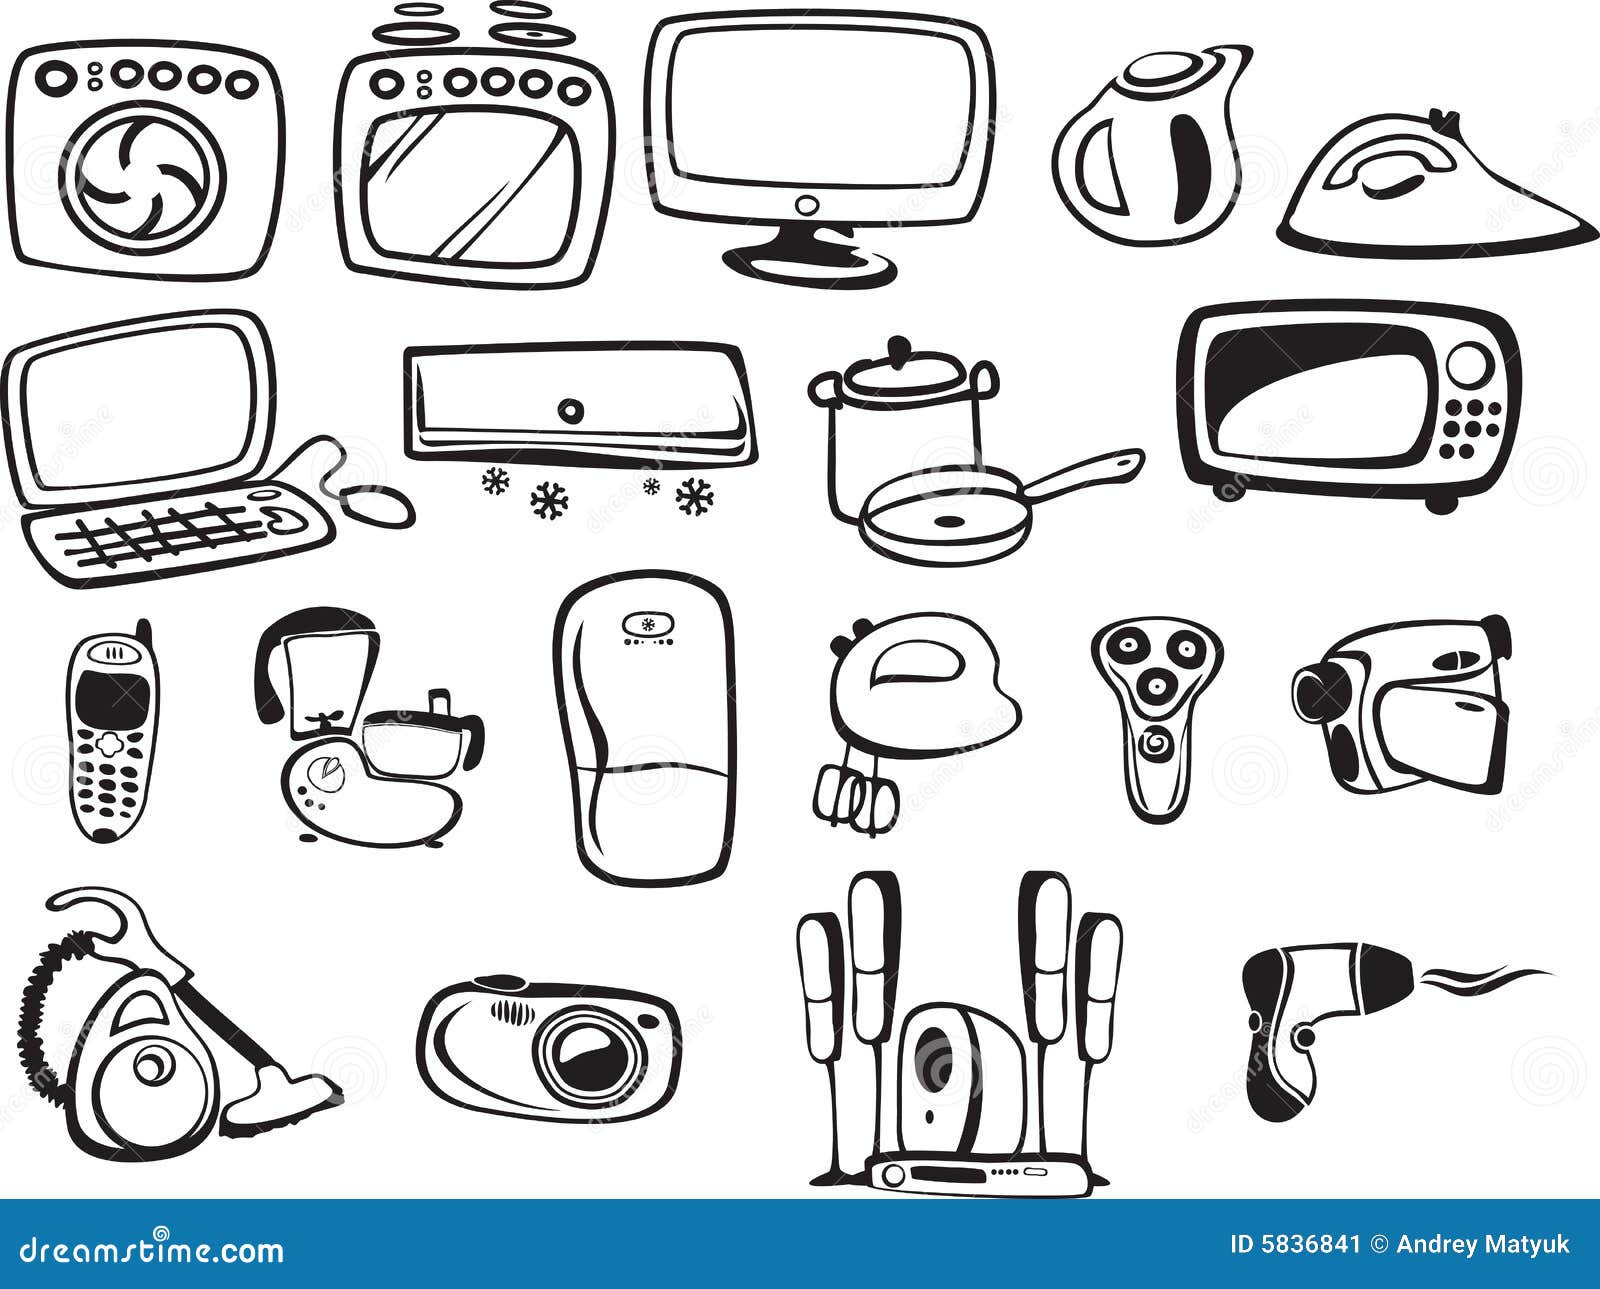 Symbols Of Household Appliances And Electronic Stock Image - Image ...